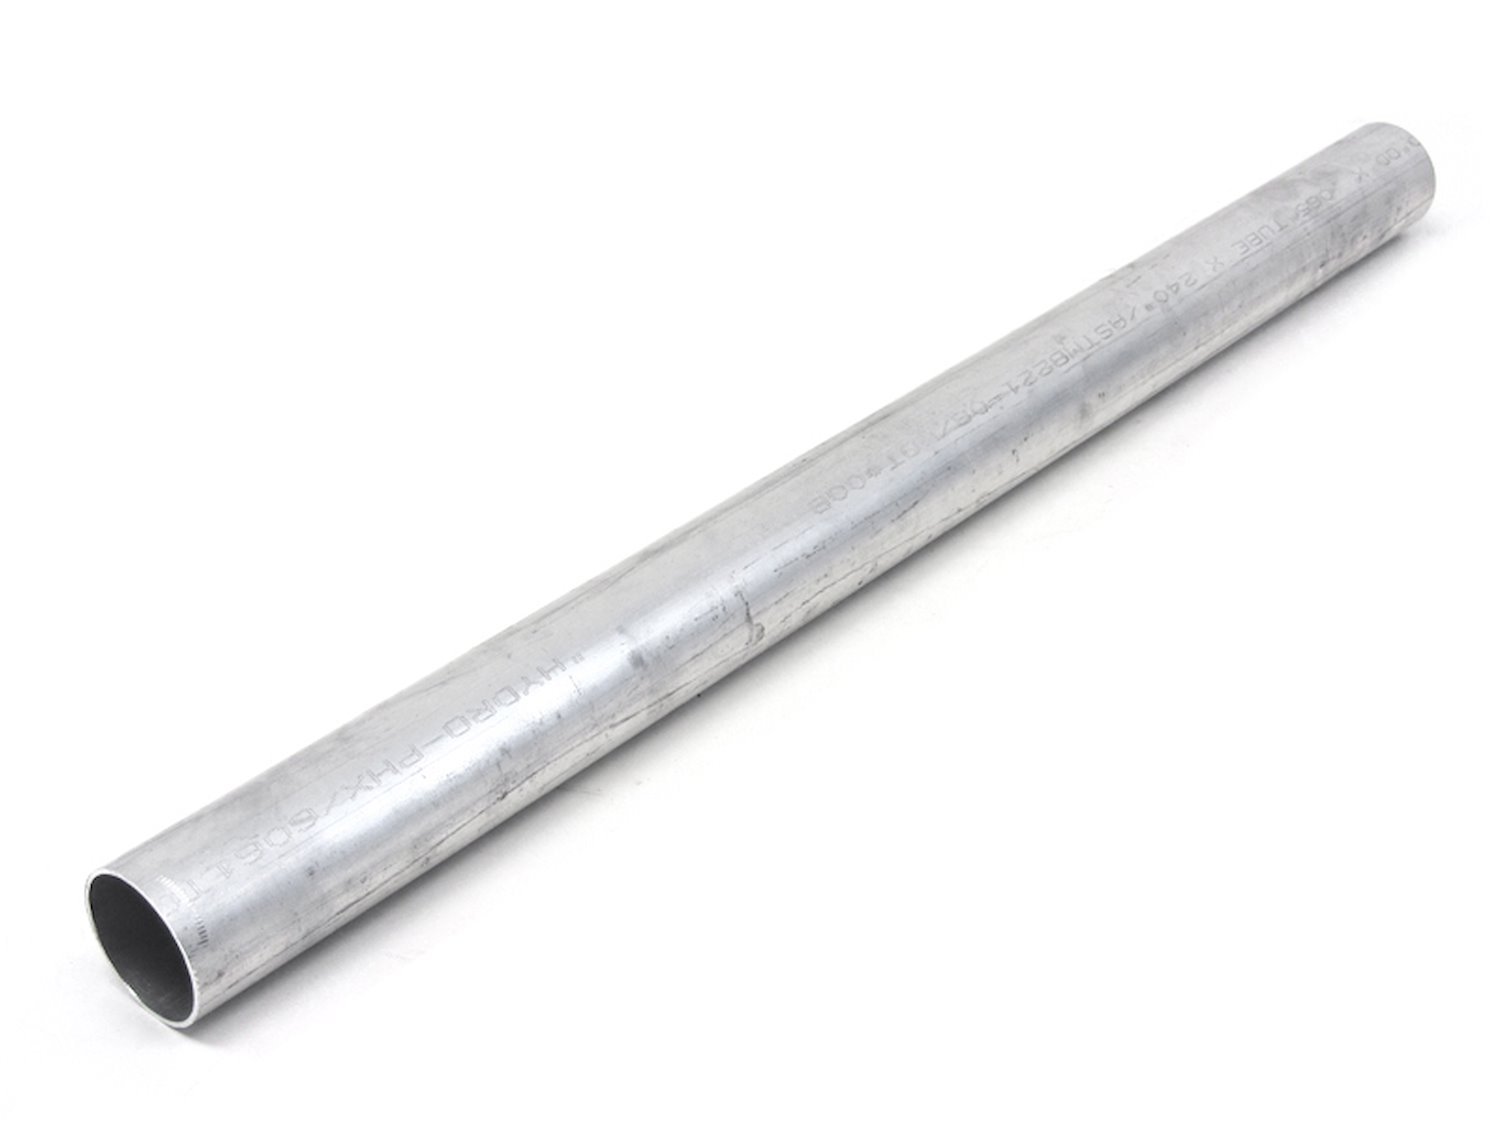 AST-3F-062 Aluminum Tubing, 6061 Aluminum, Straight Tubing, 5/8 in. OD, Seamless, Raw Finish, 3 ft. Long